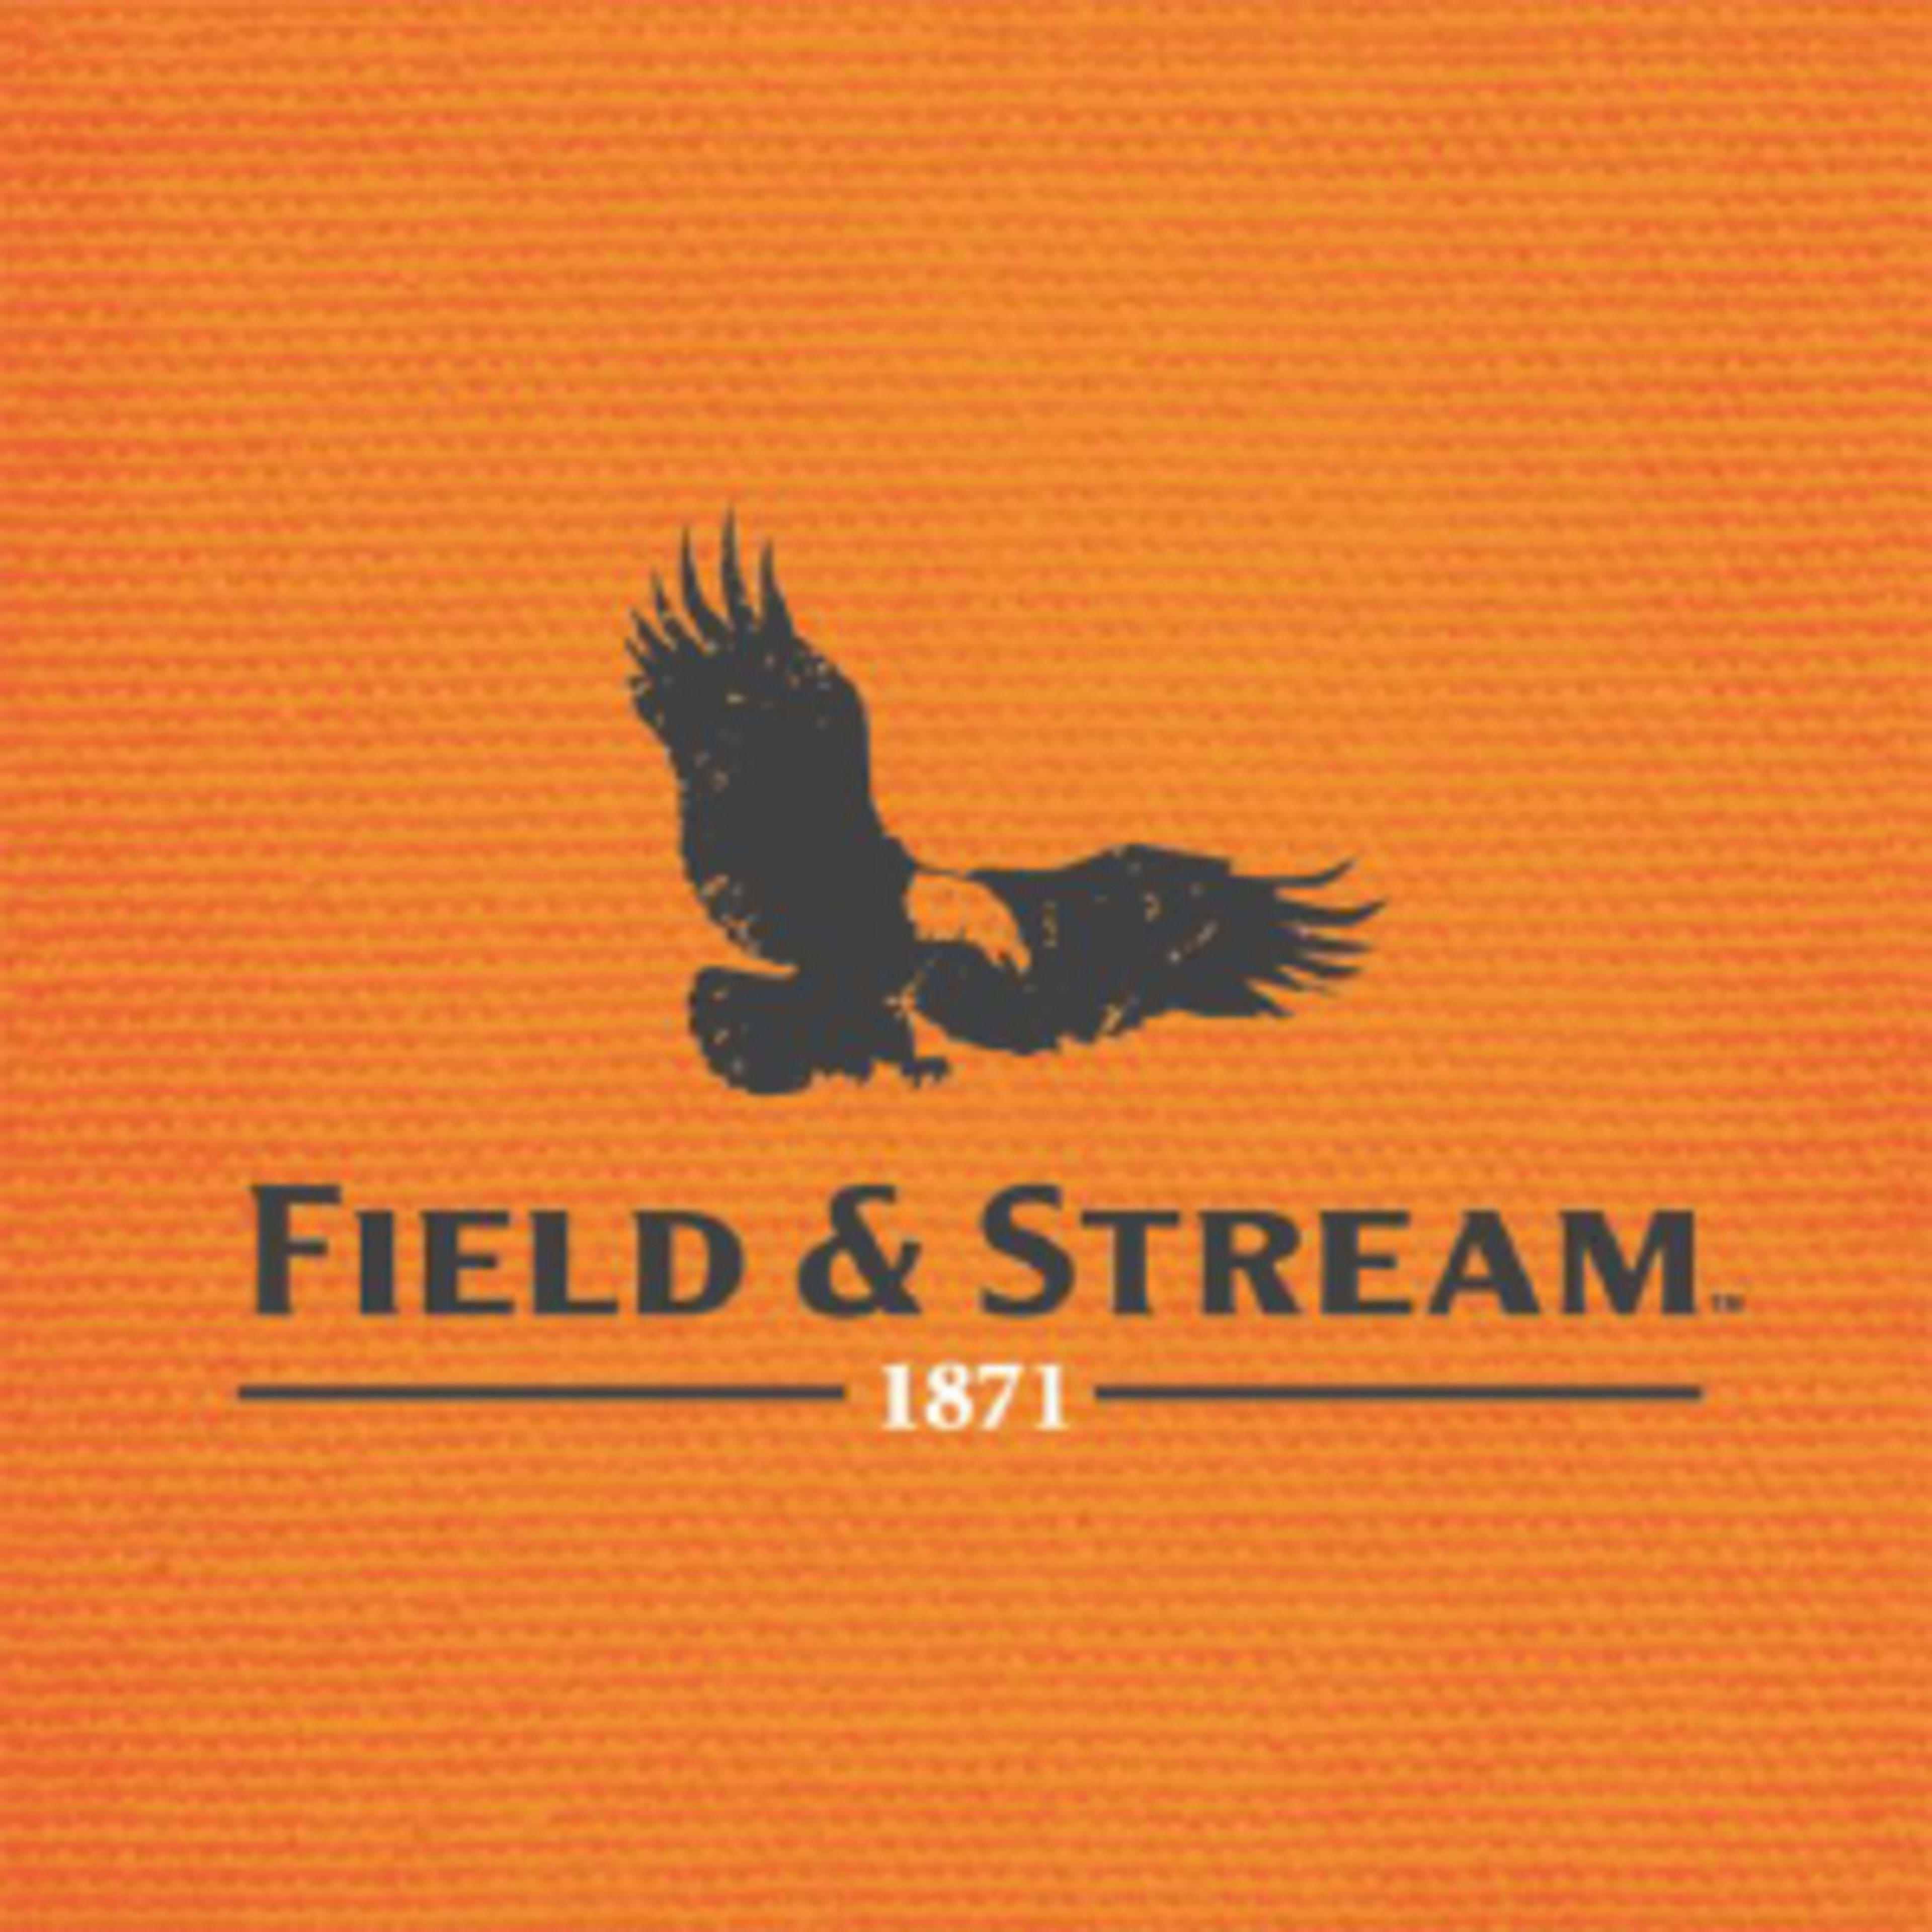 Field & StreamCode